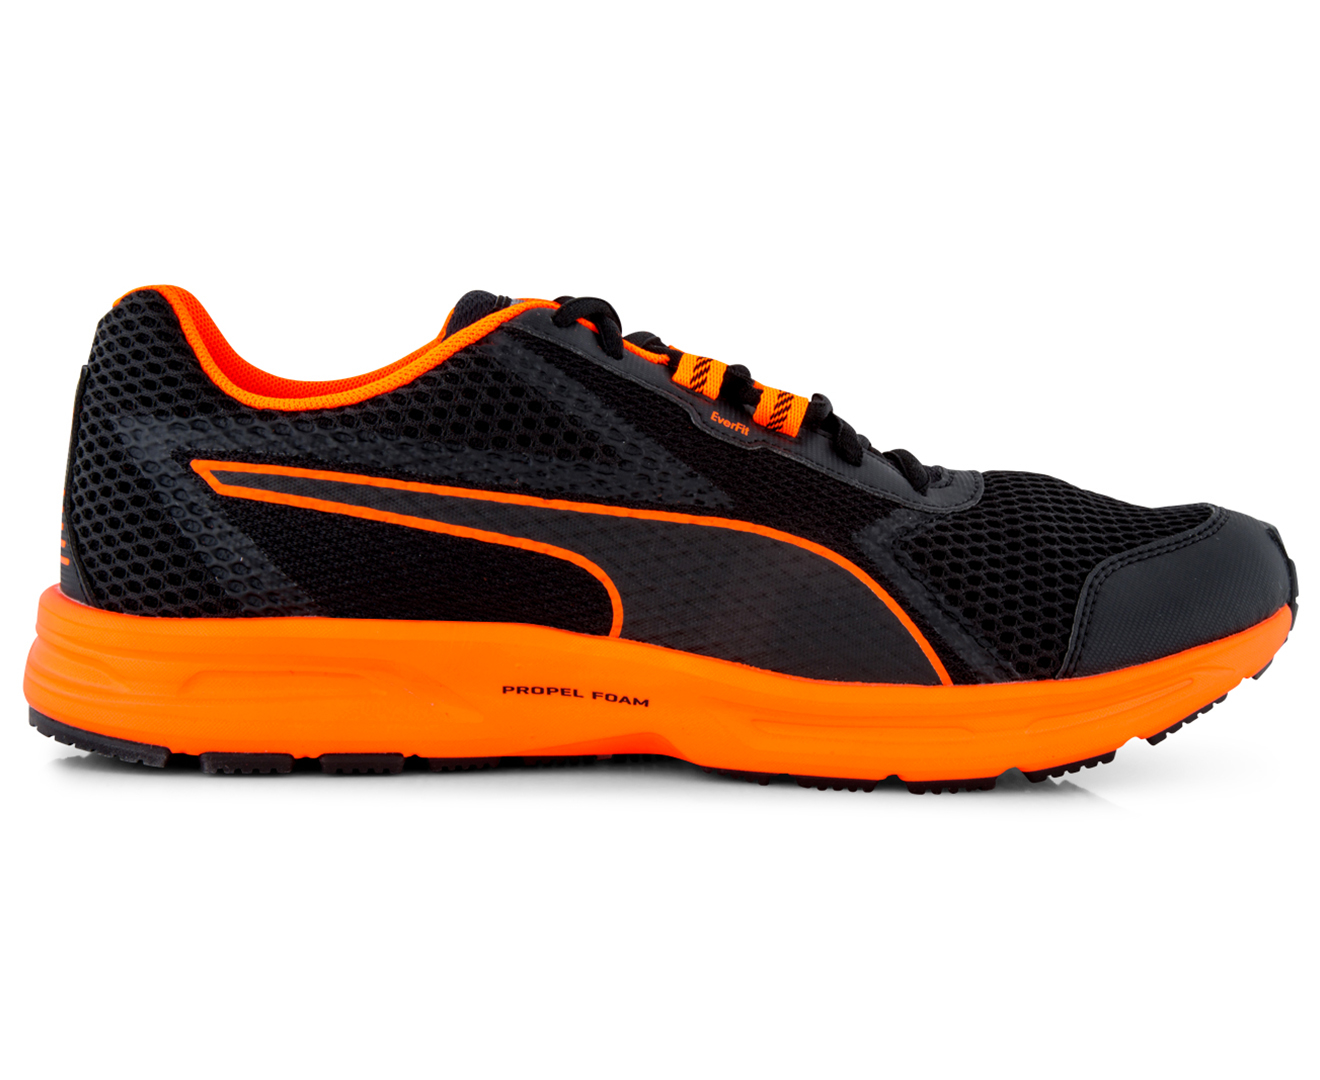 Puma Men's Essential Runner Shoe - Black/Shocking Orange | Catch.com.au